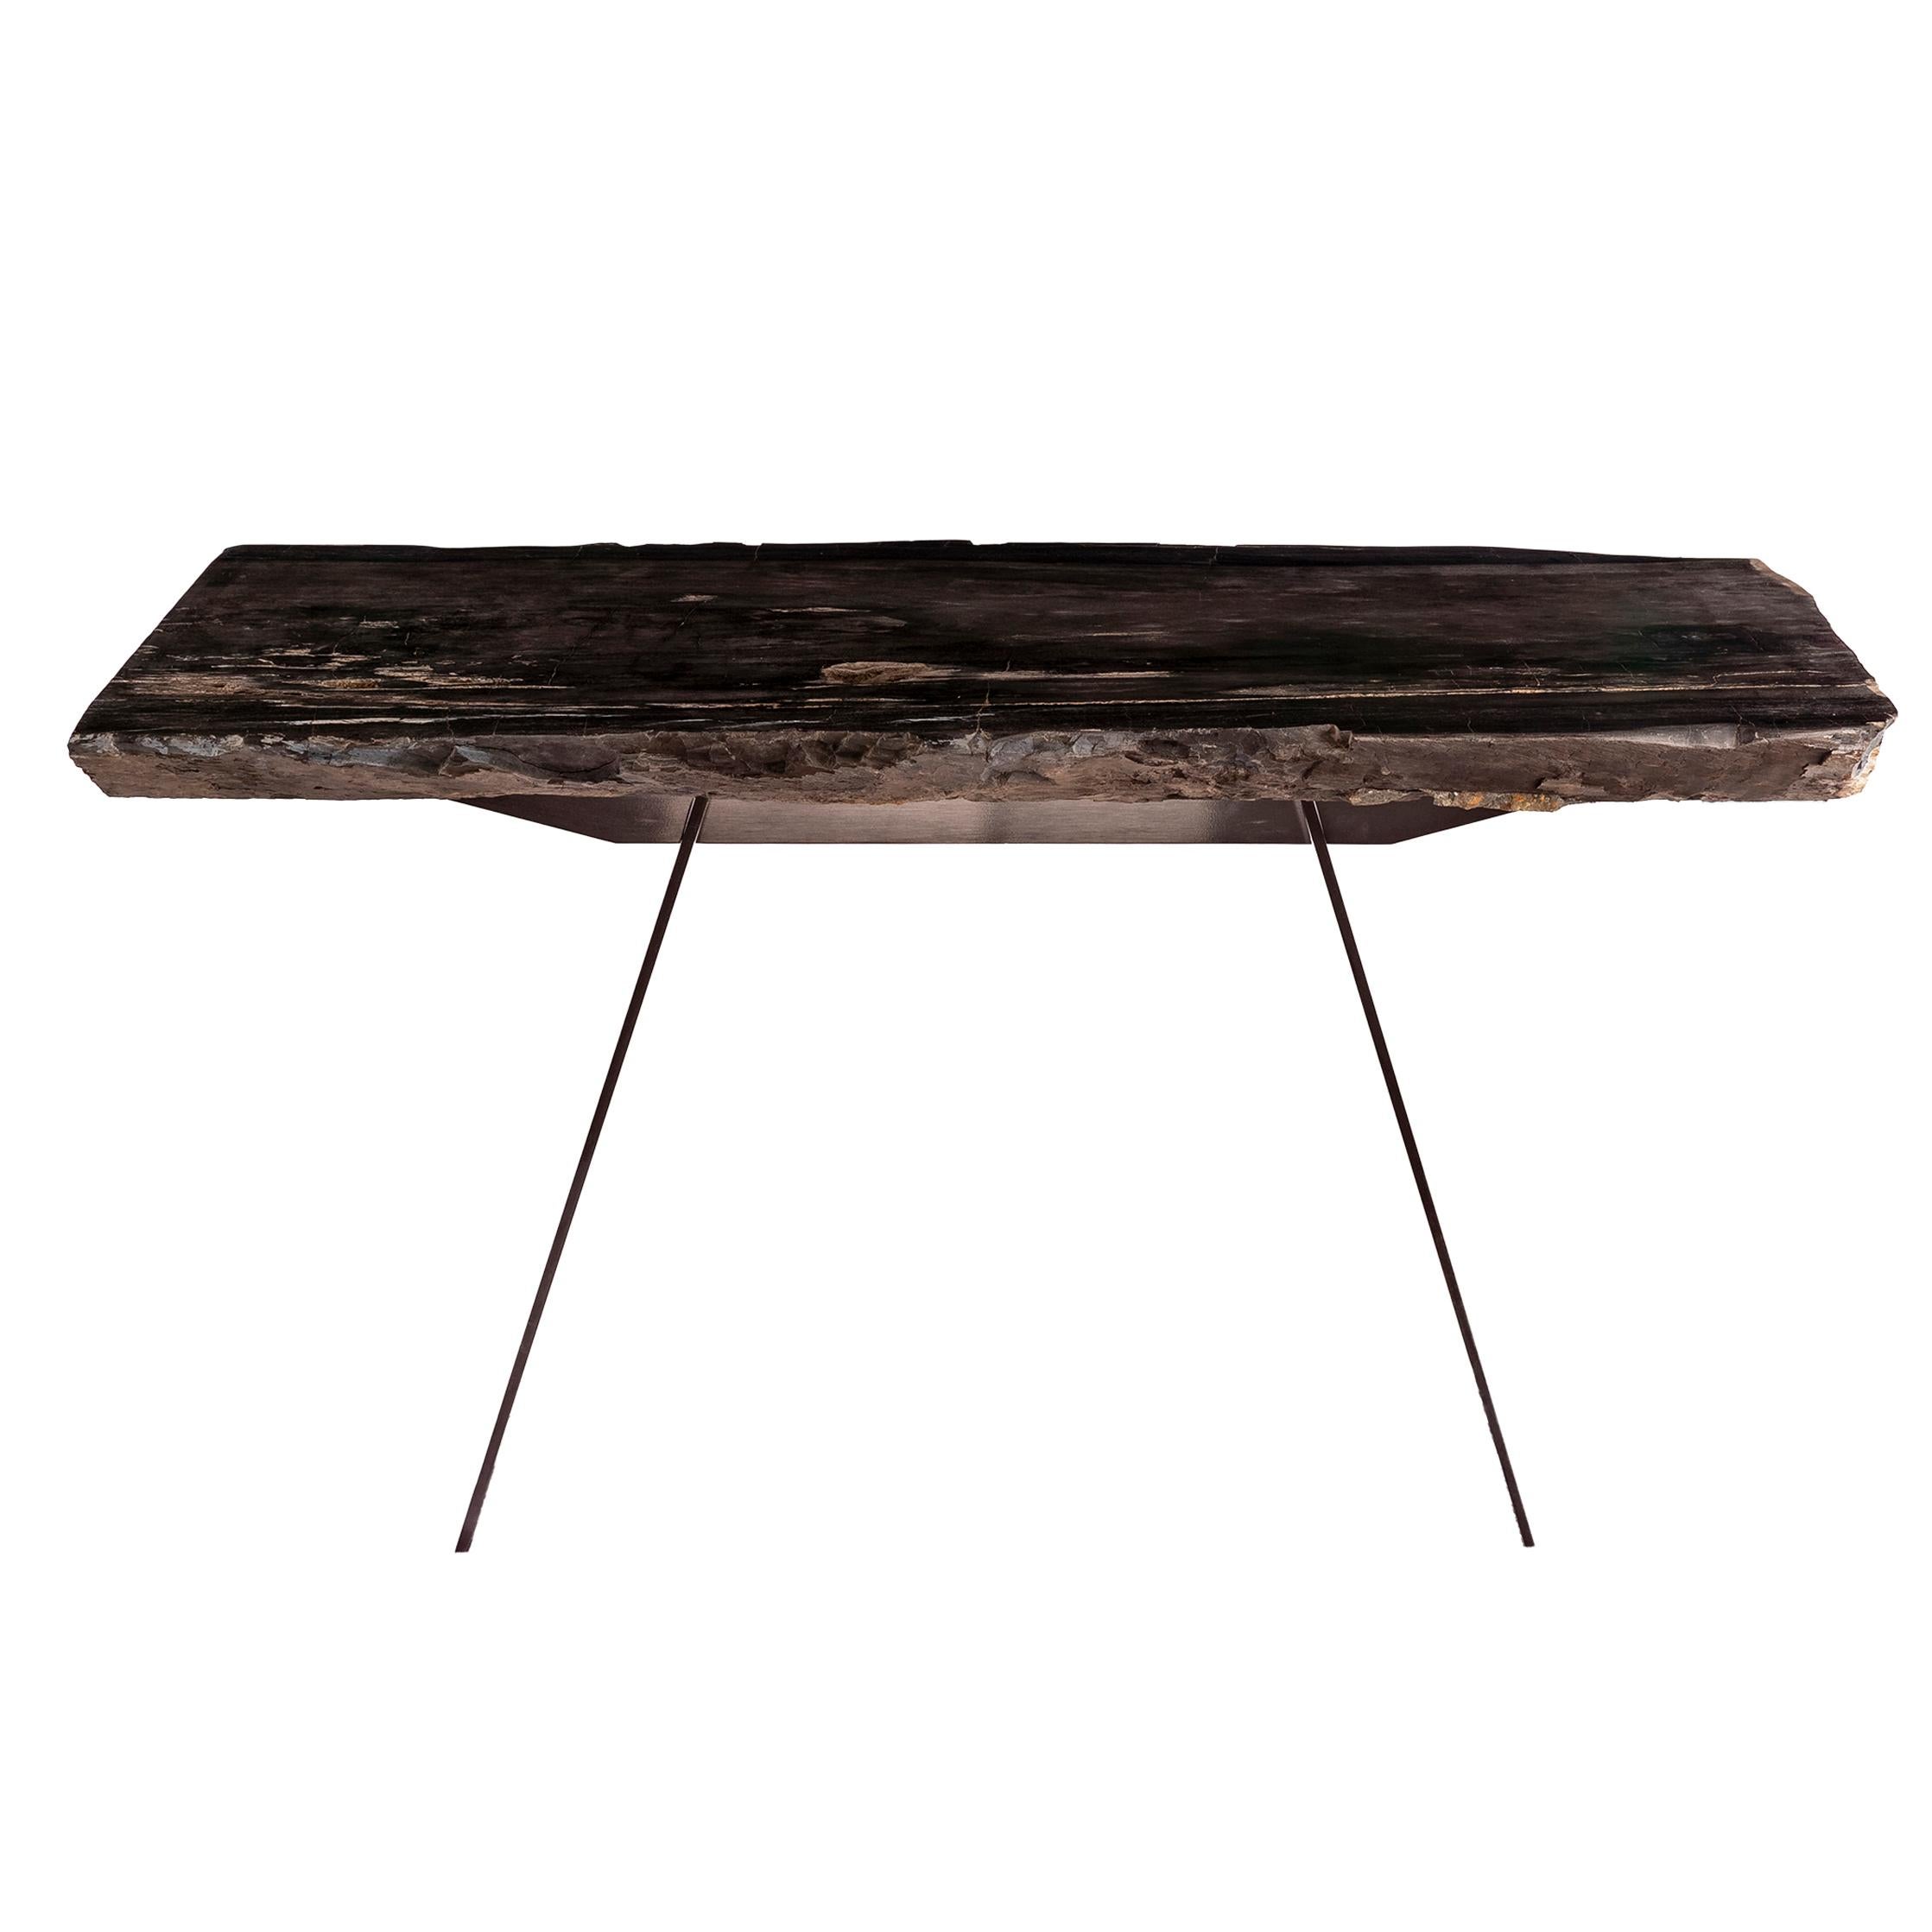 Organic Modern Rectangular Console Table, Natural Organic Shape, Petrified Wood with Metal Base